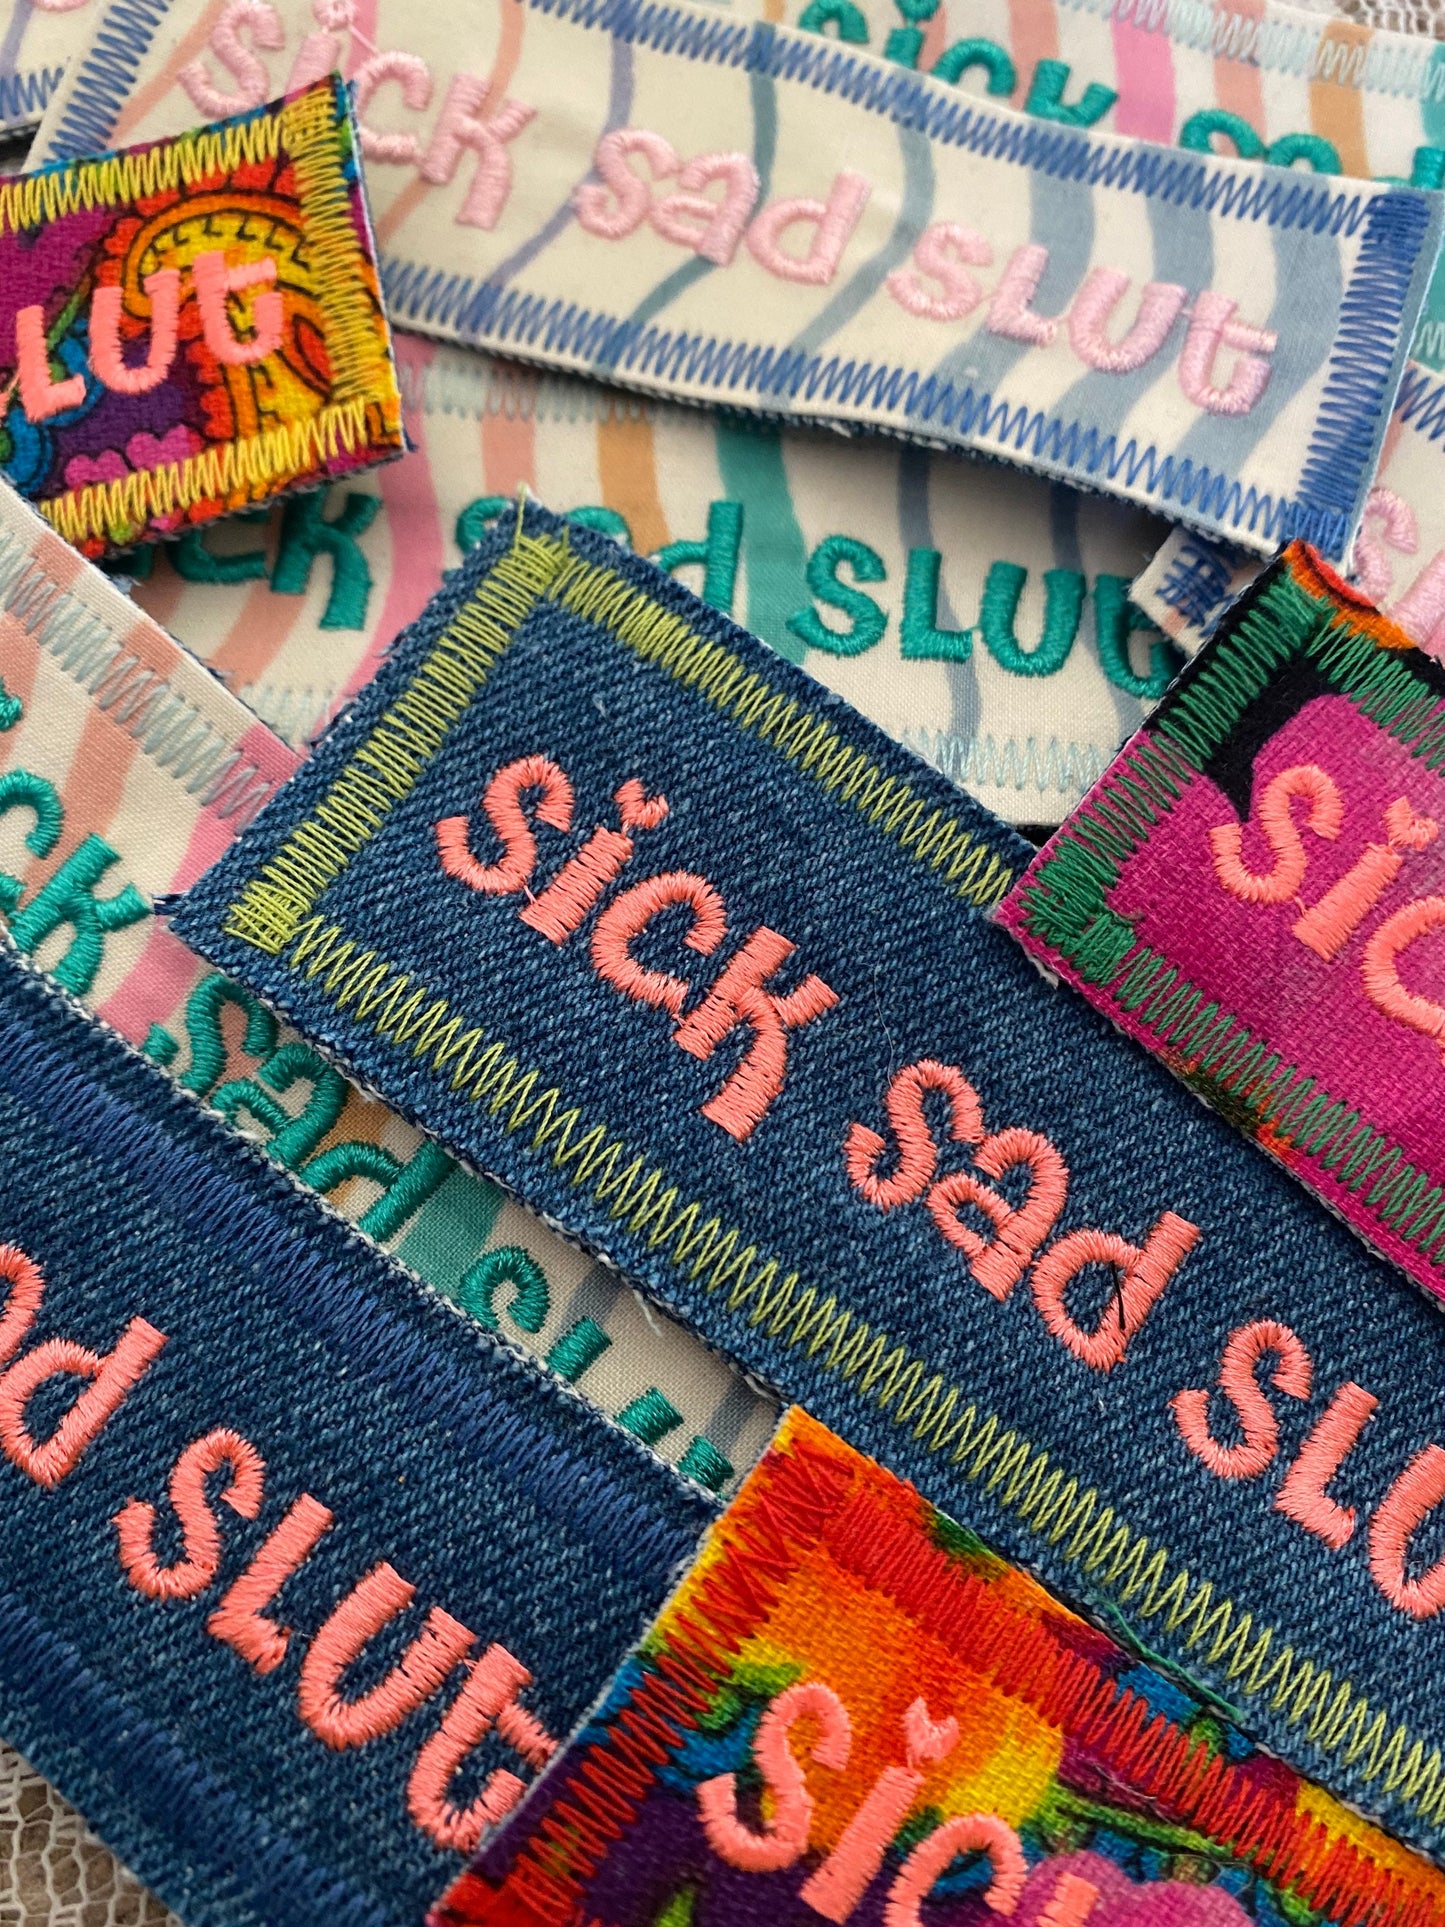 Sick, Sad Slut Embroidered Patch